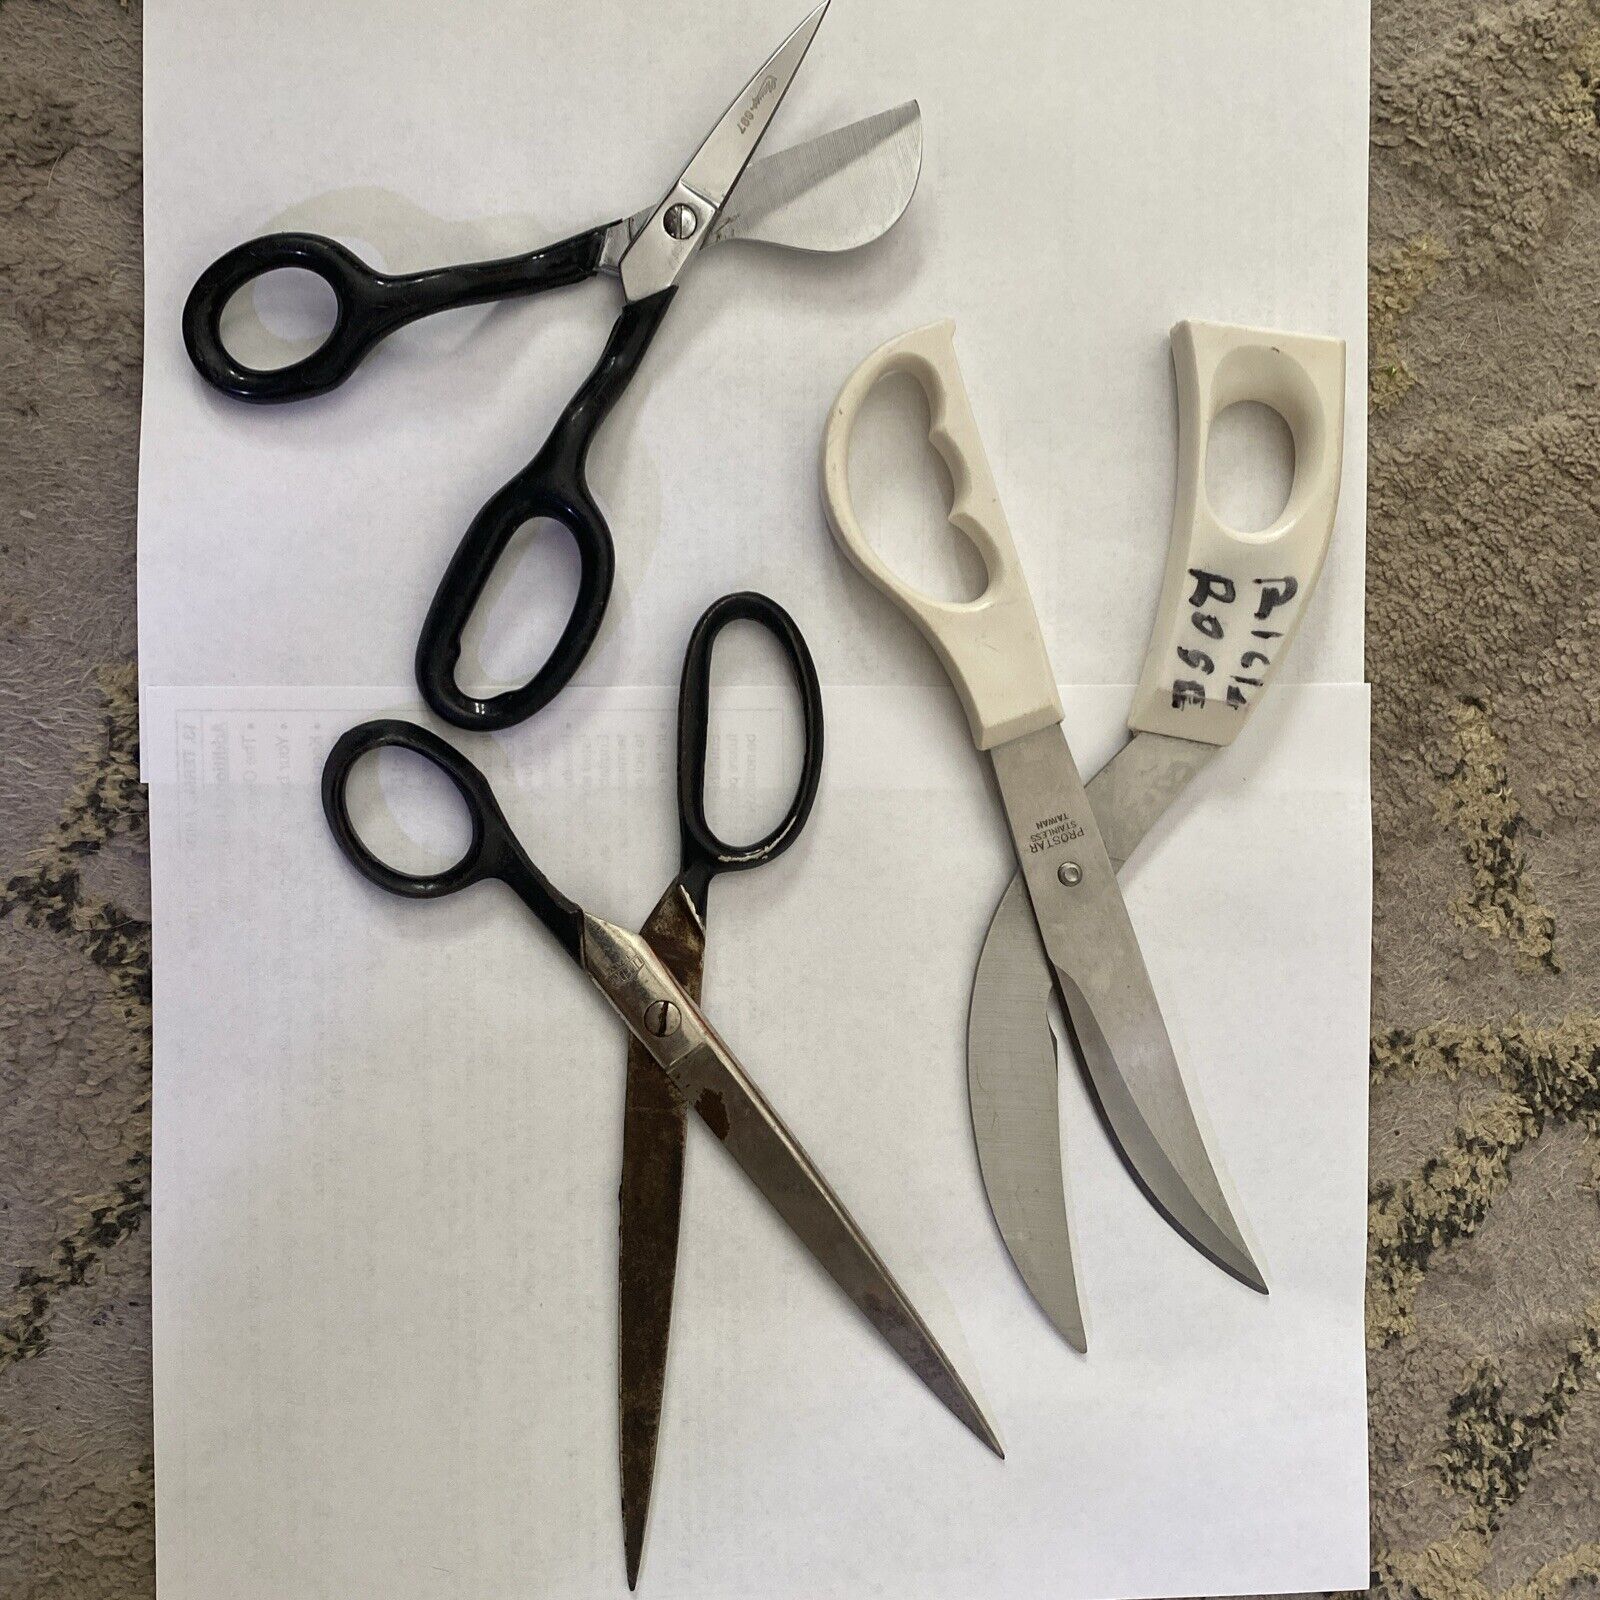 Three Pair of Scissors Clauss, Lifedge and Prostar